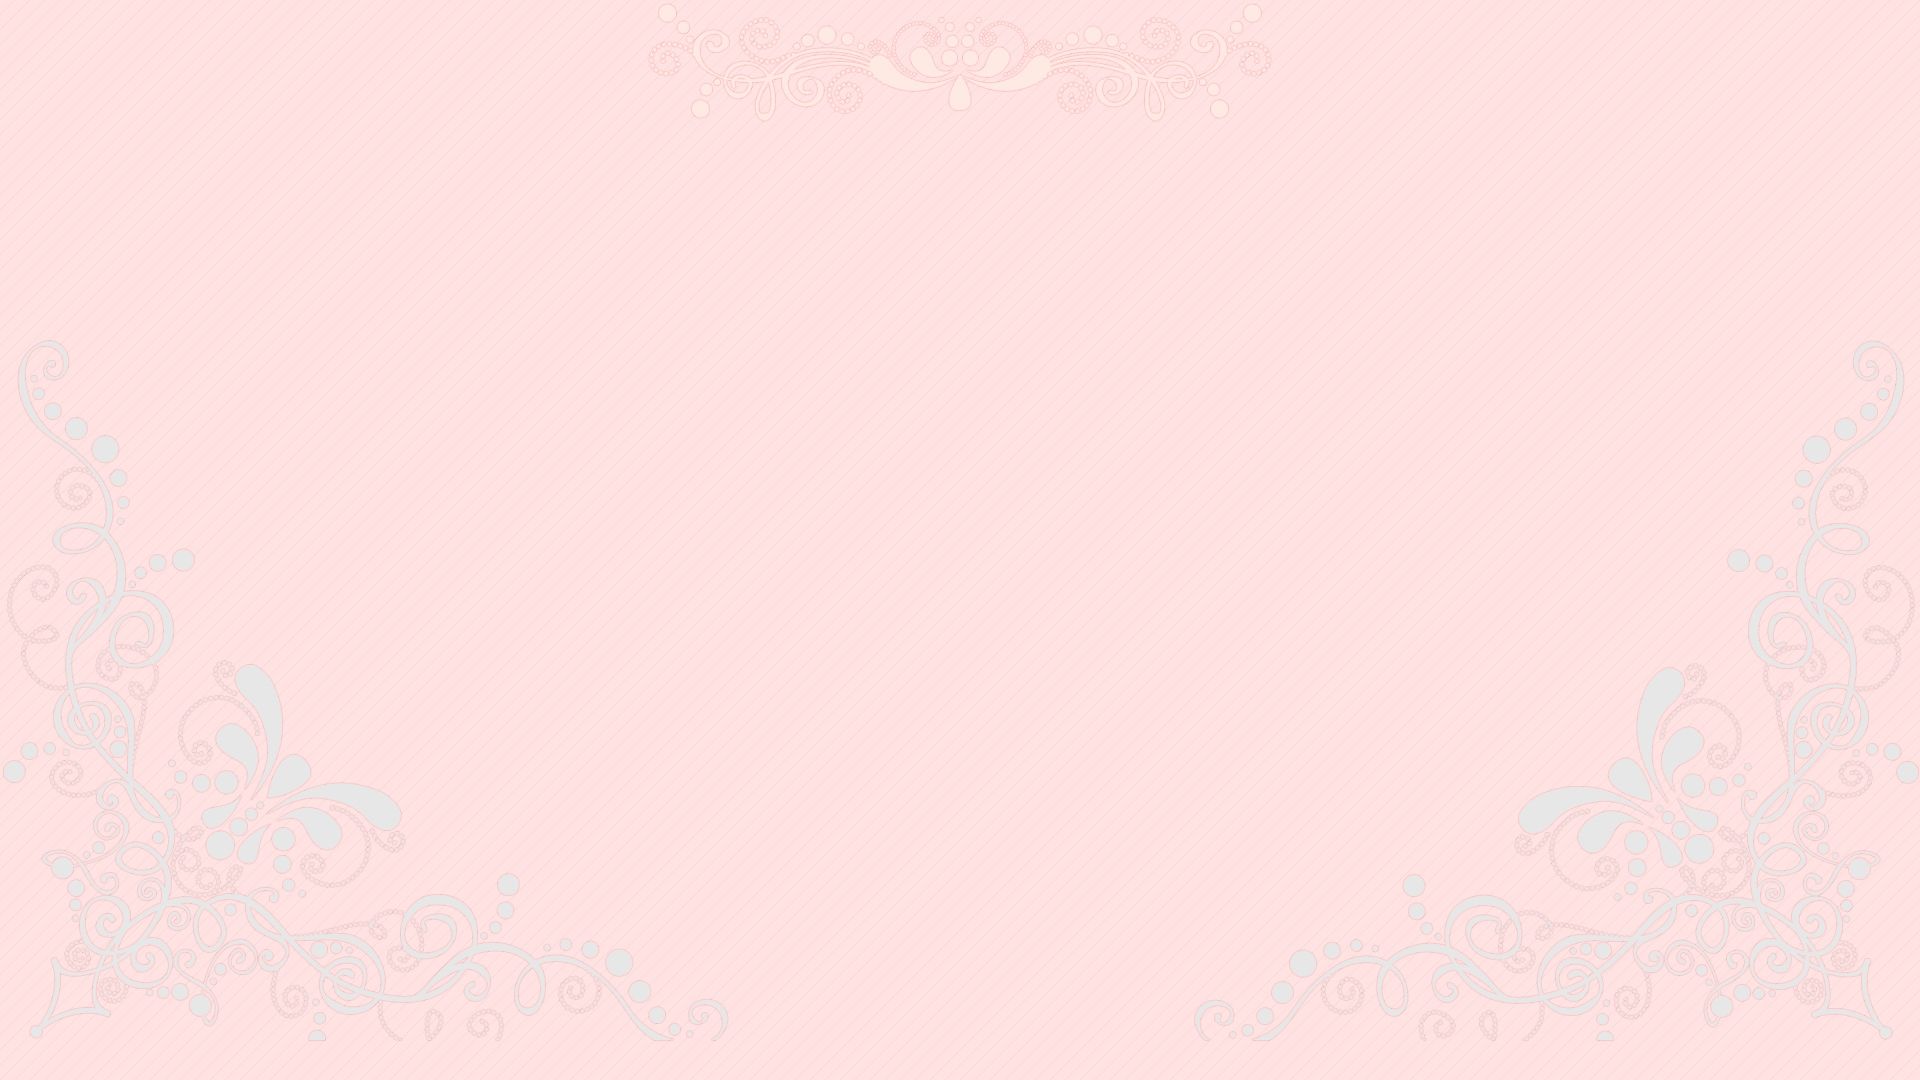 Pastel Pink Desktop Wallpapers On Wallpaperdog Over 40,000+ cool wallpapers to choose from. pastel pink desktop wallpapers on